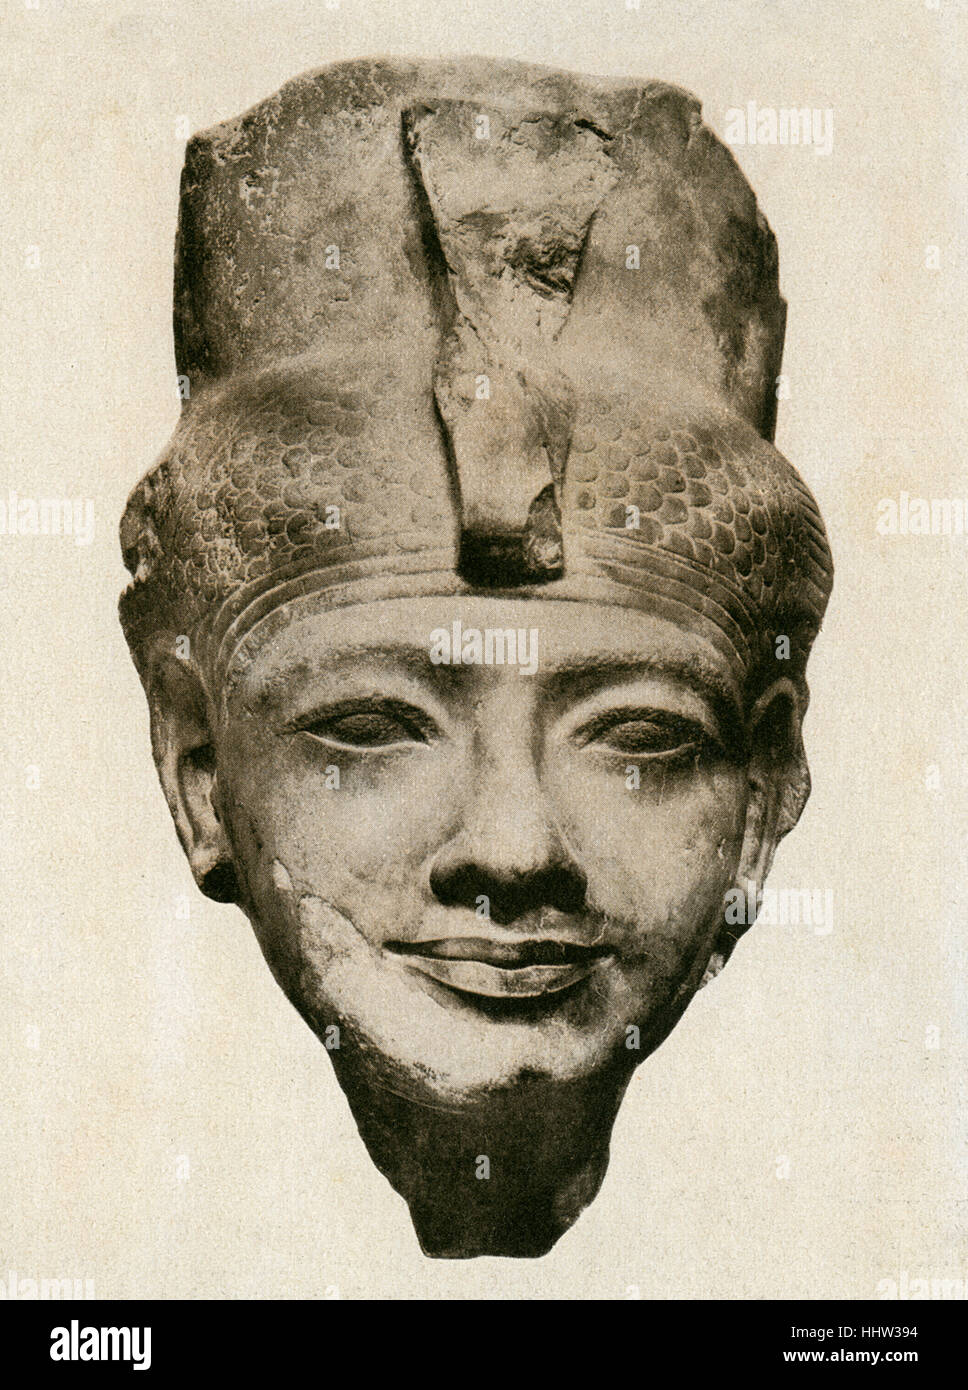 Mut, egiziana antica dea mmother. Maut / Mout. Museo del Cairo Foto Stock